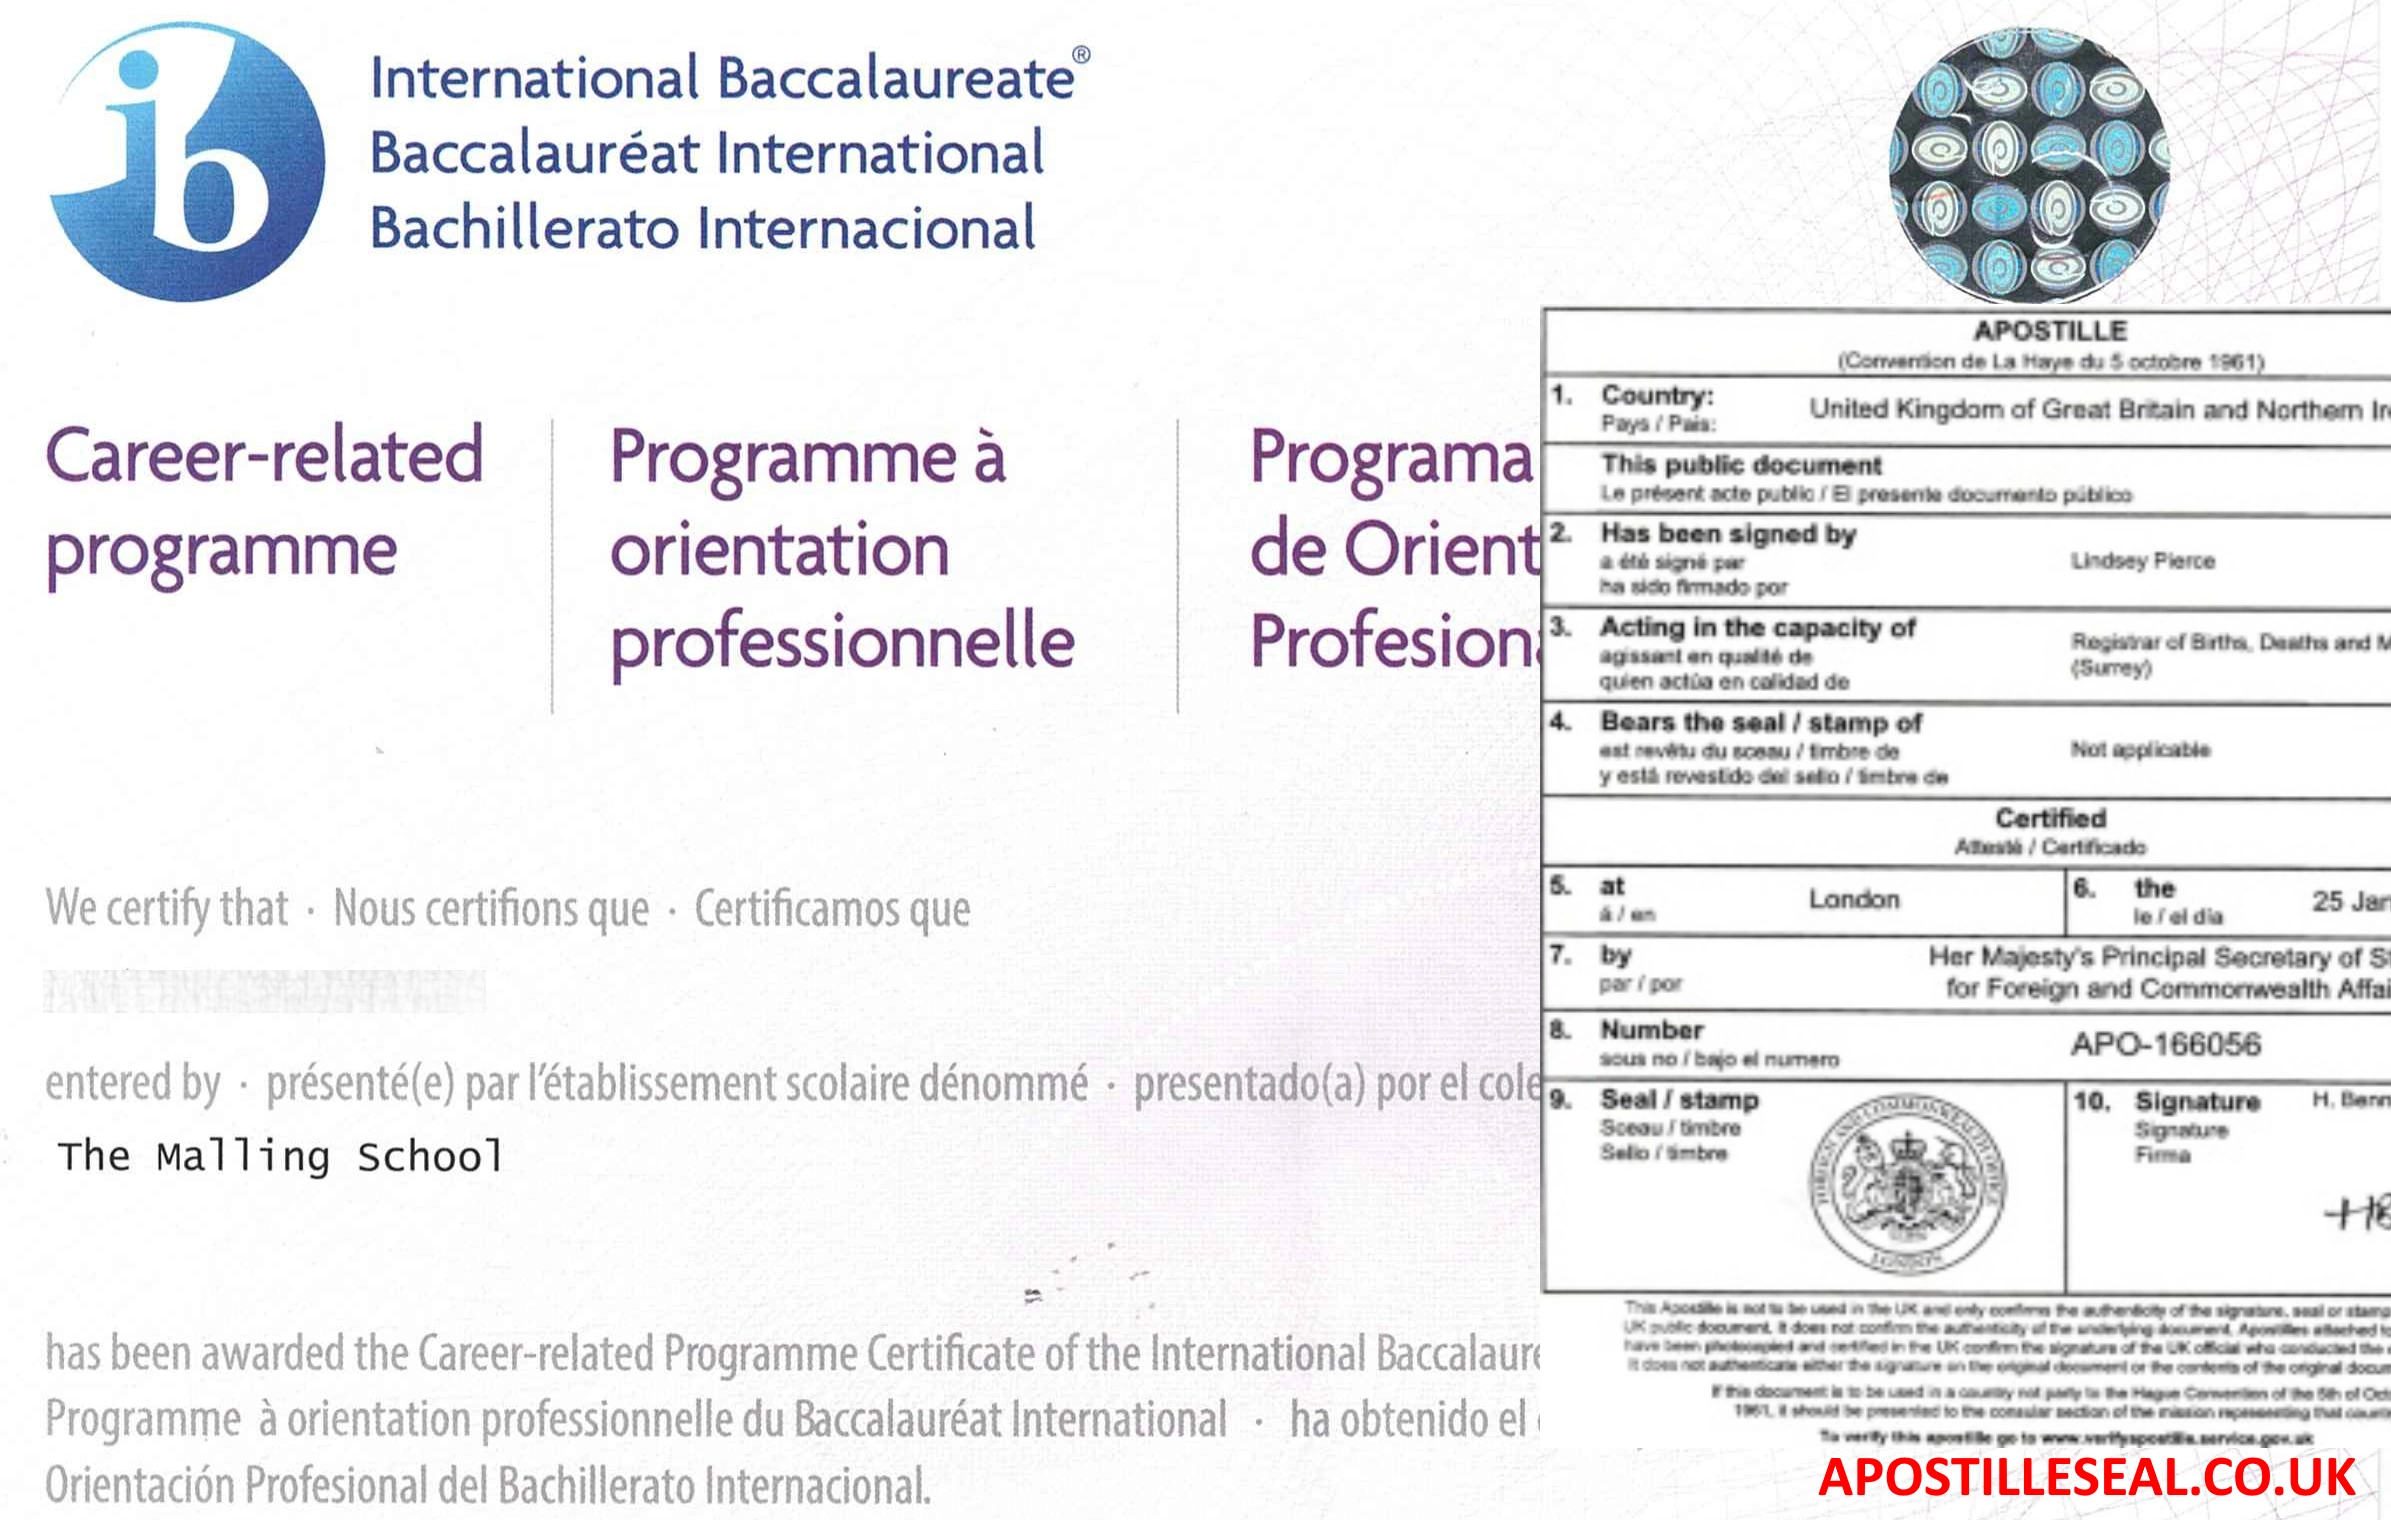 international baccalaureate apostille